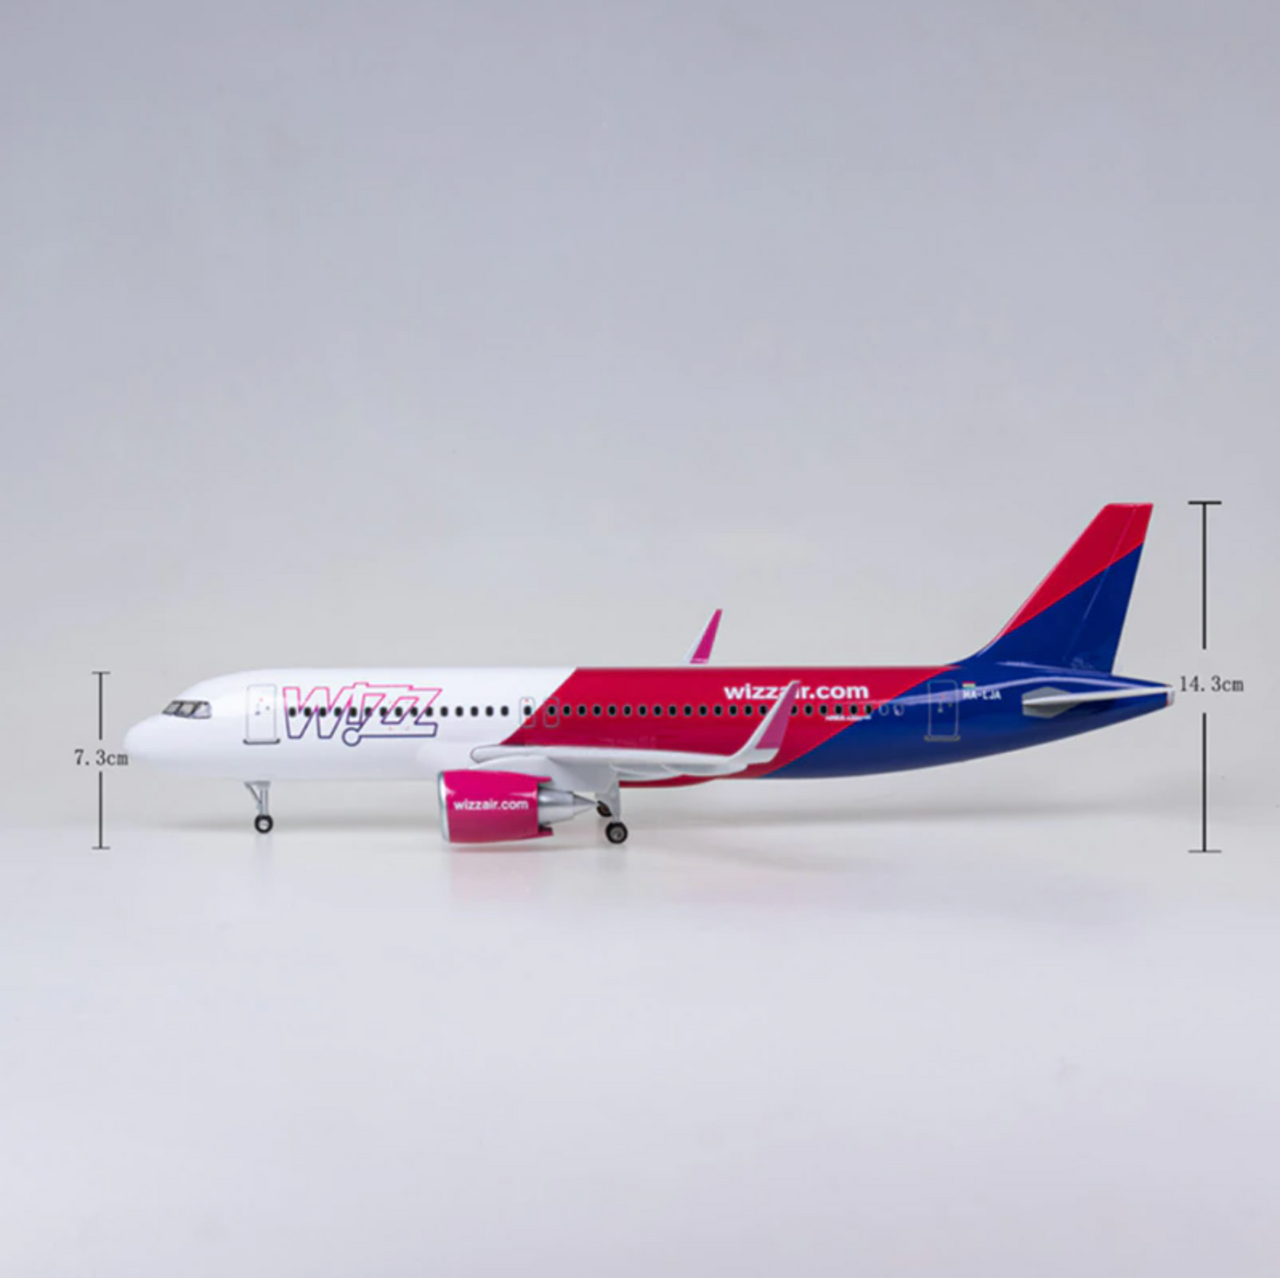 Wizz Air Airbus A320Neo Airplane Model (47CM)